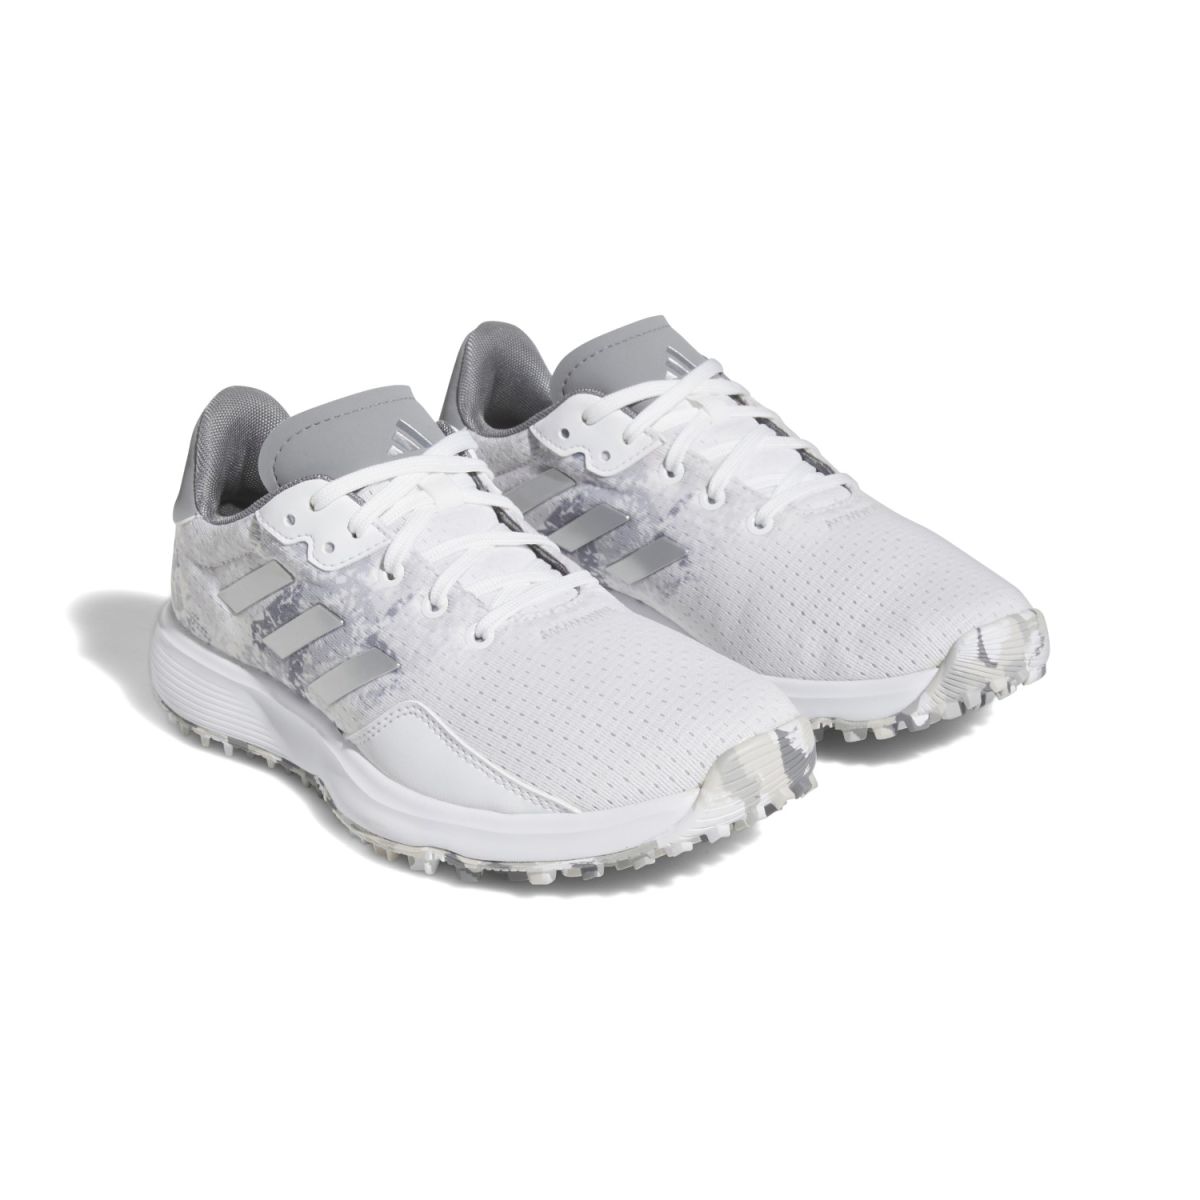 adidas jr s2g sl white grey 355